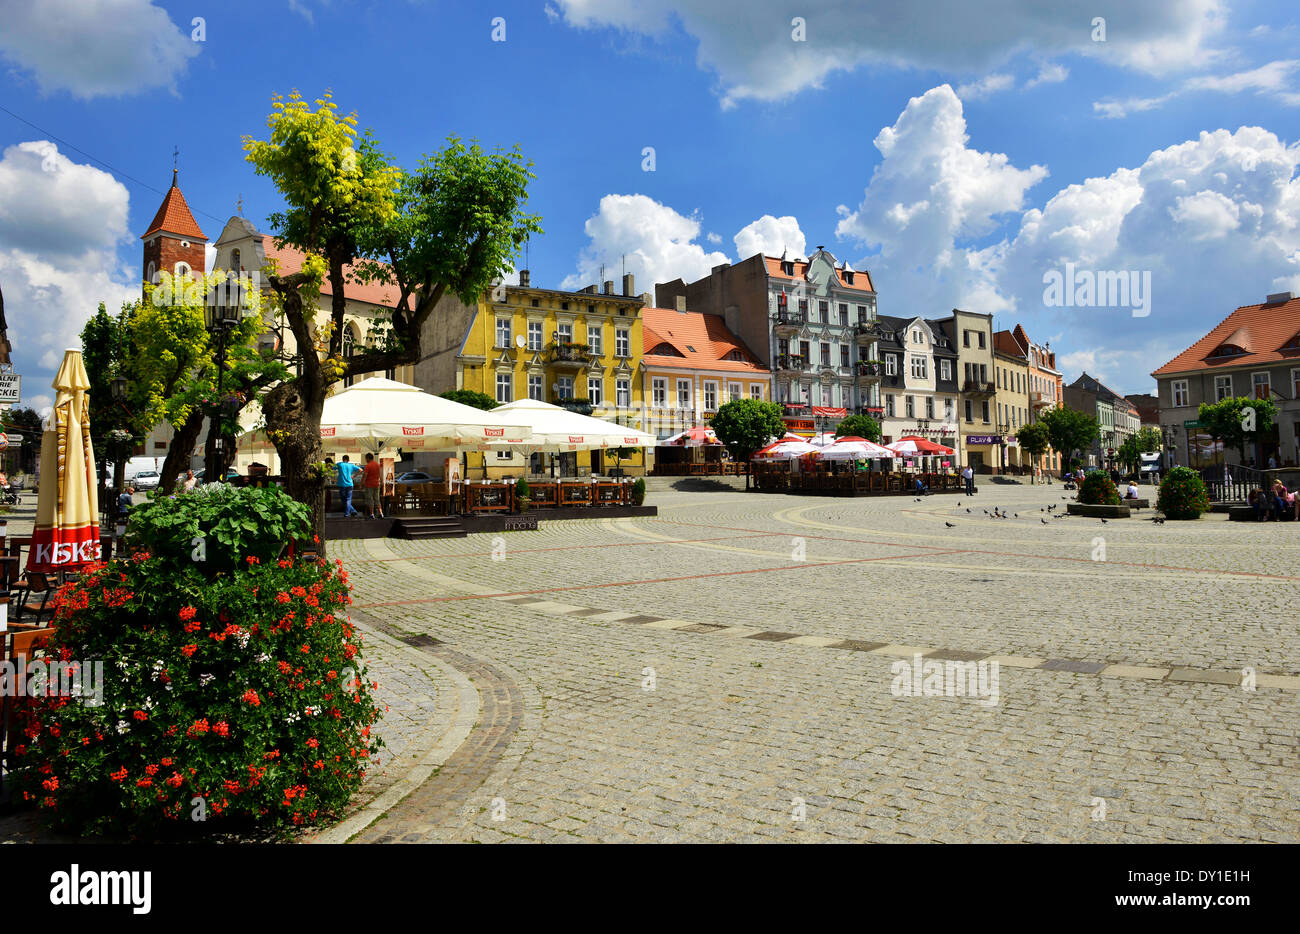 Market square, Gniezno, Wielkopolska province Poland Stock Photo